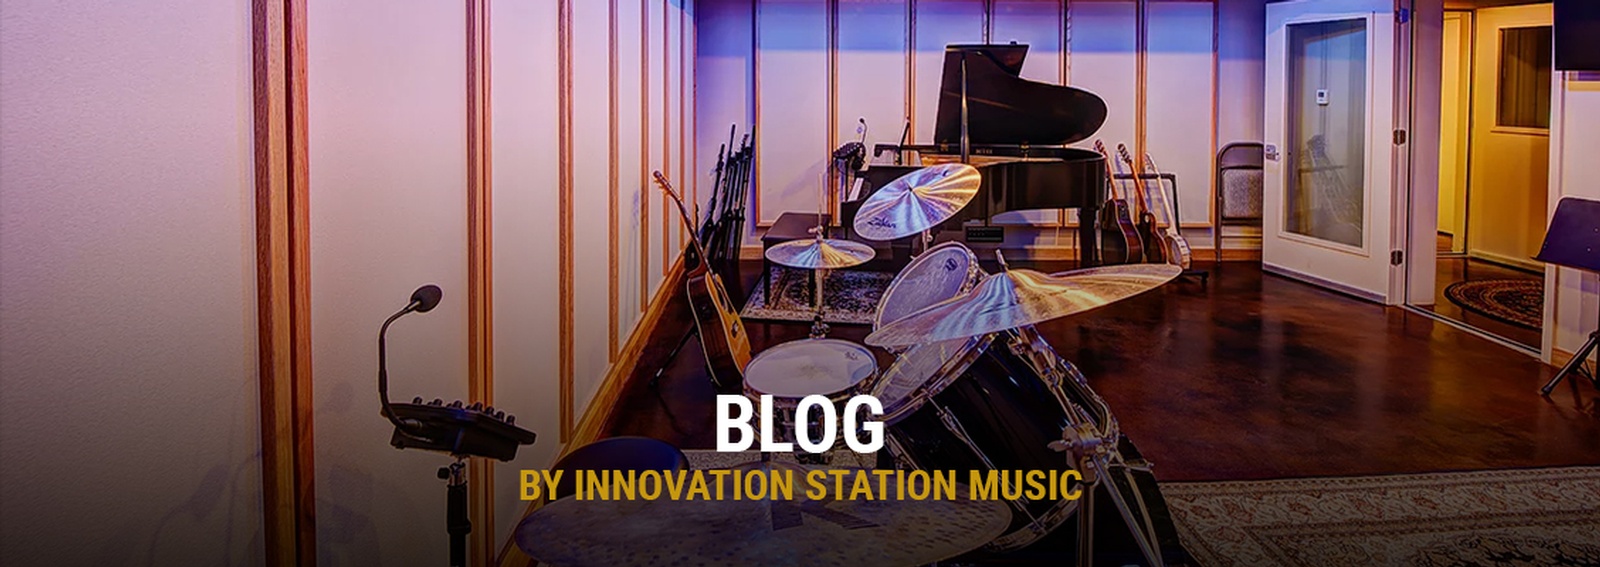 Blog by Innovation Station Music